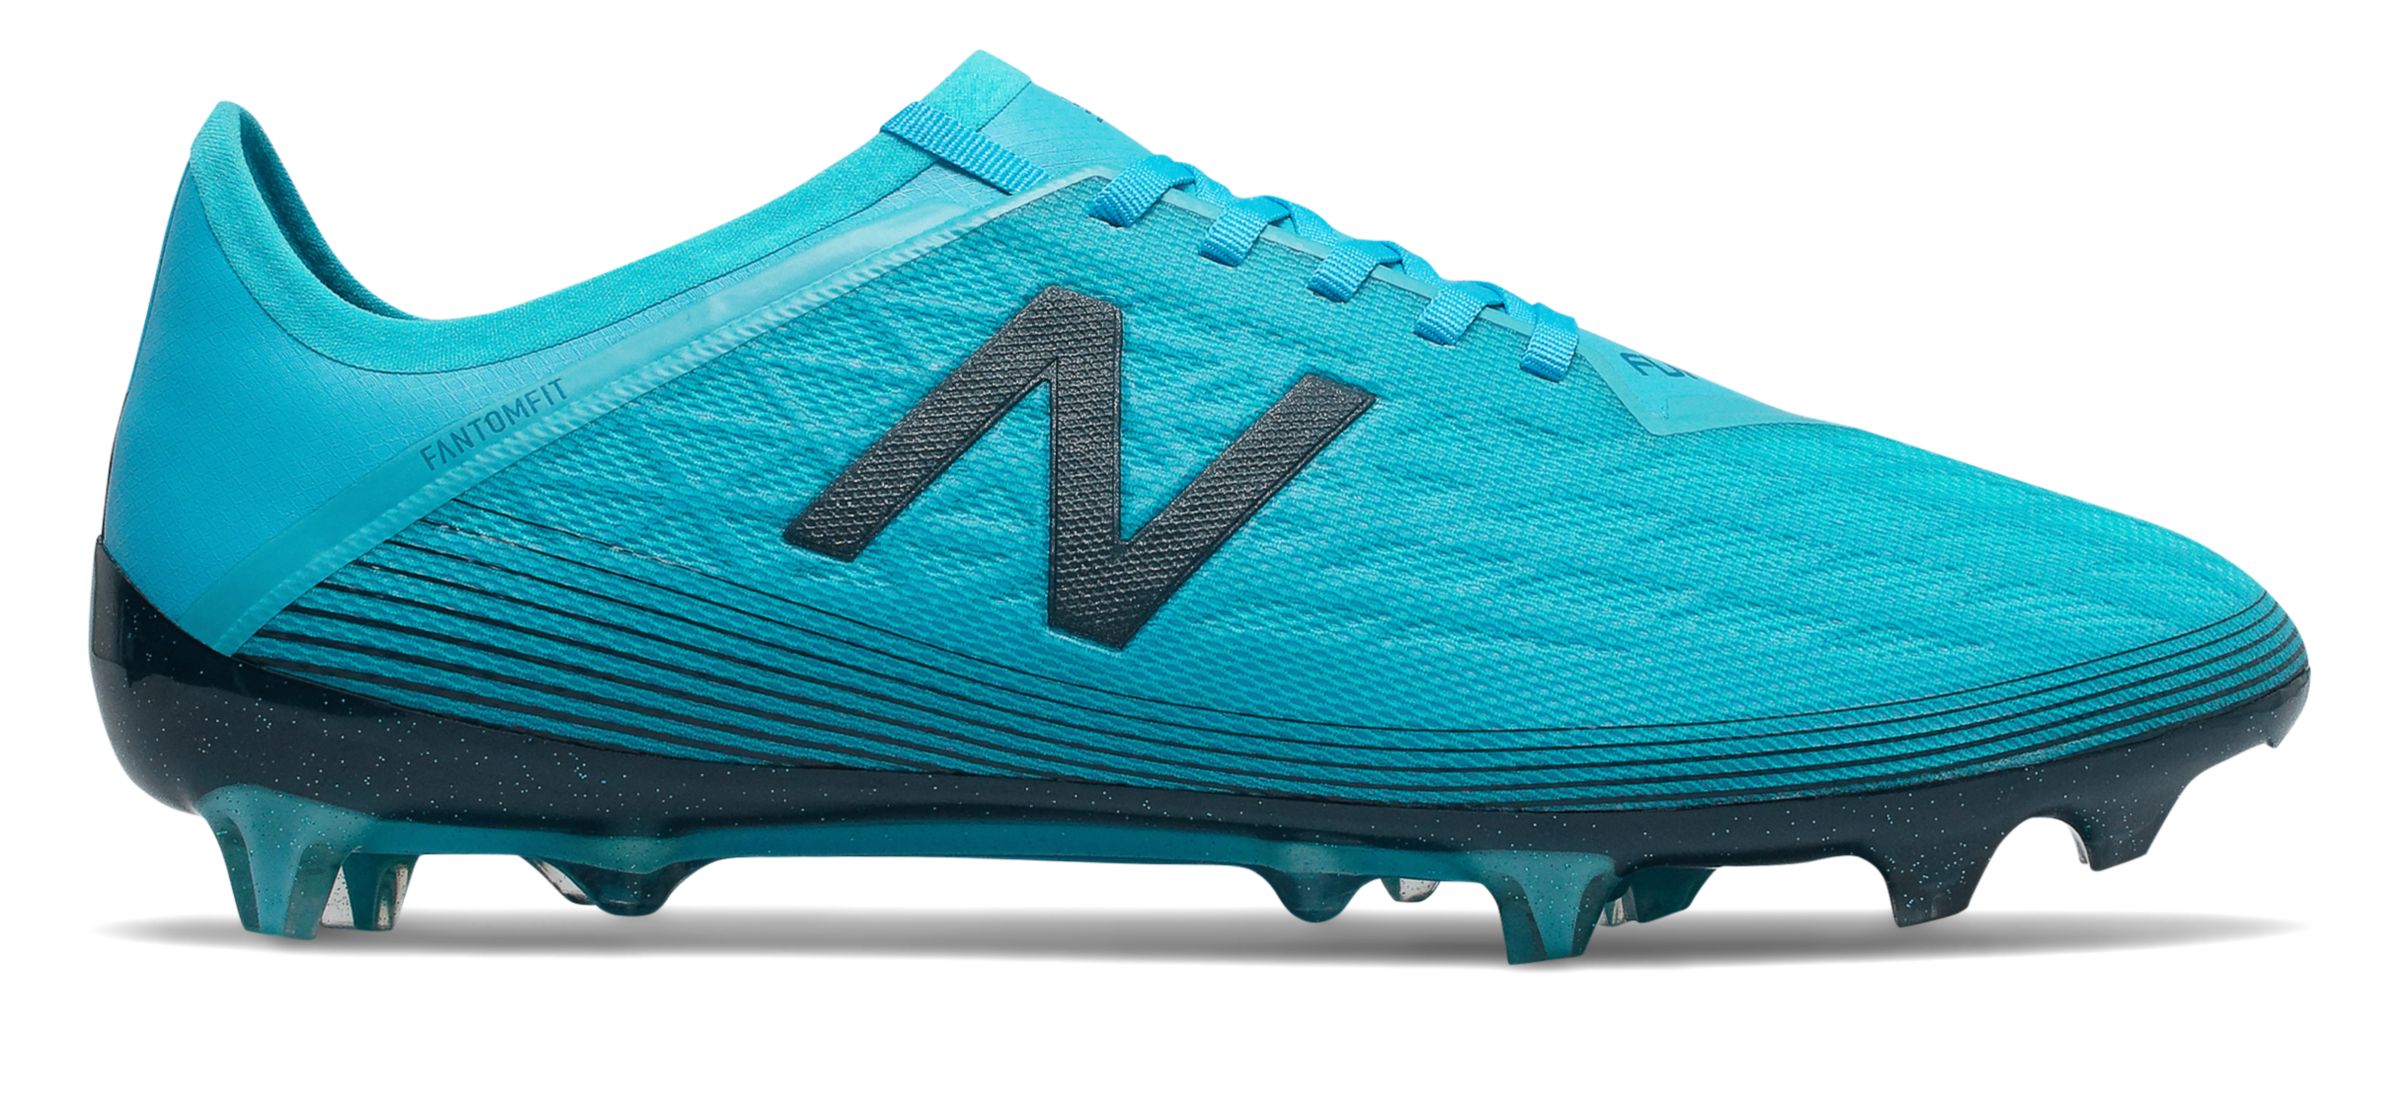 Furon v5 Pro FG Football Shoes - New 